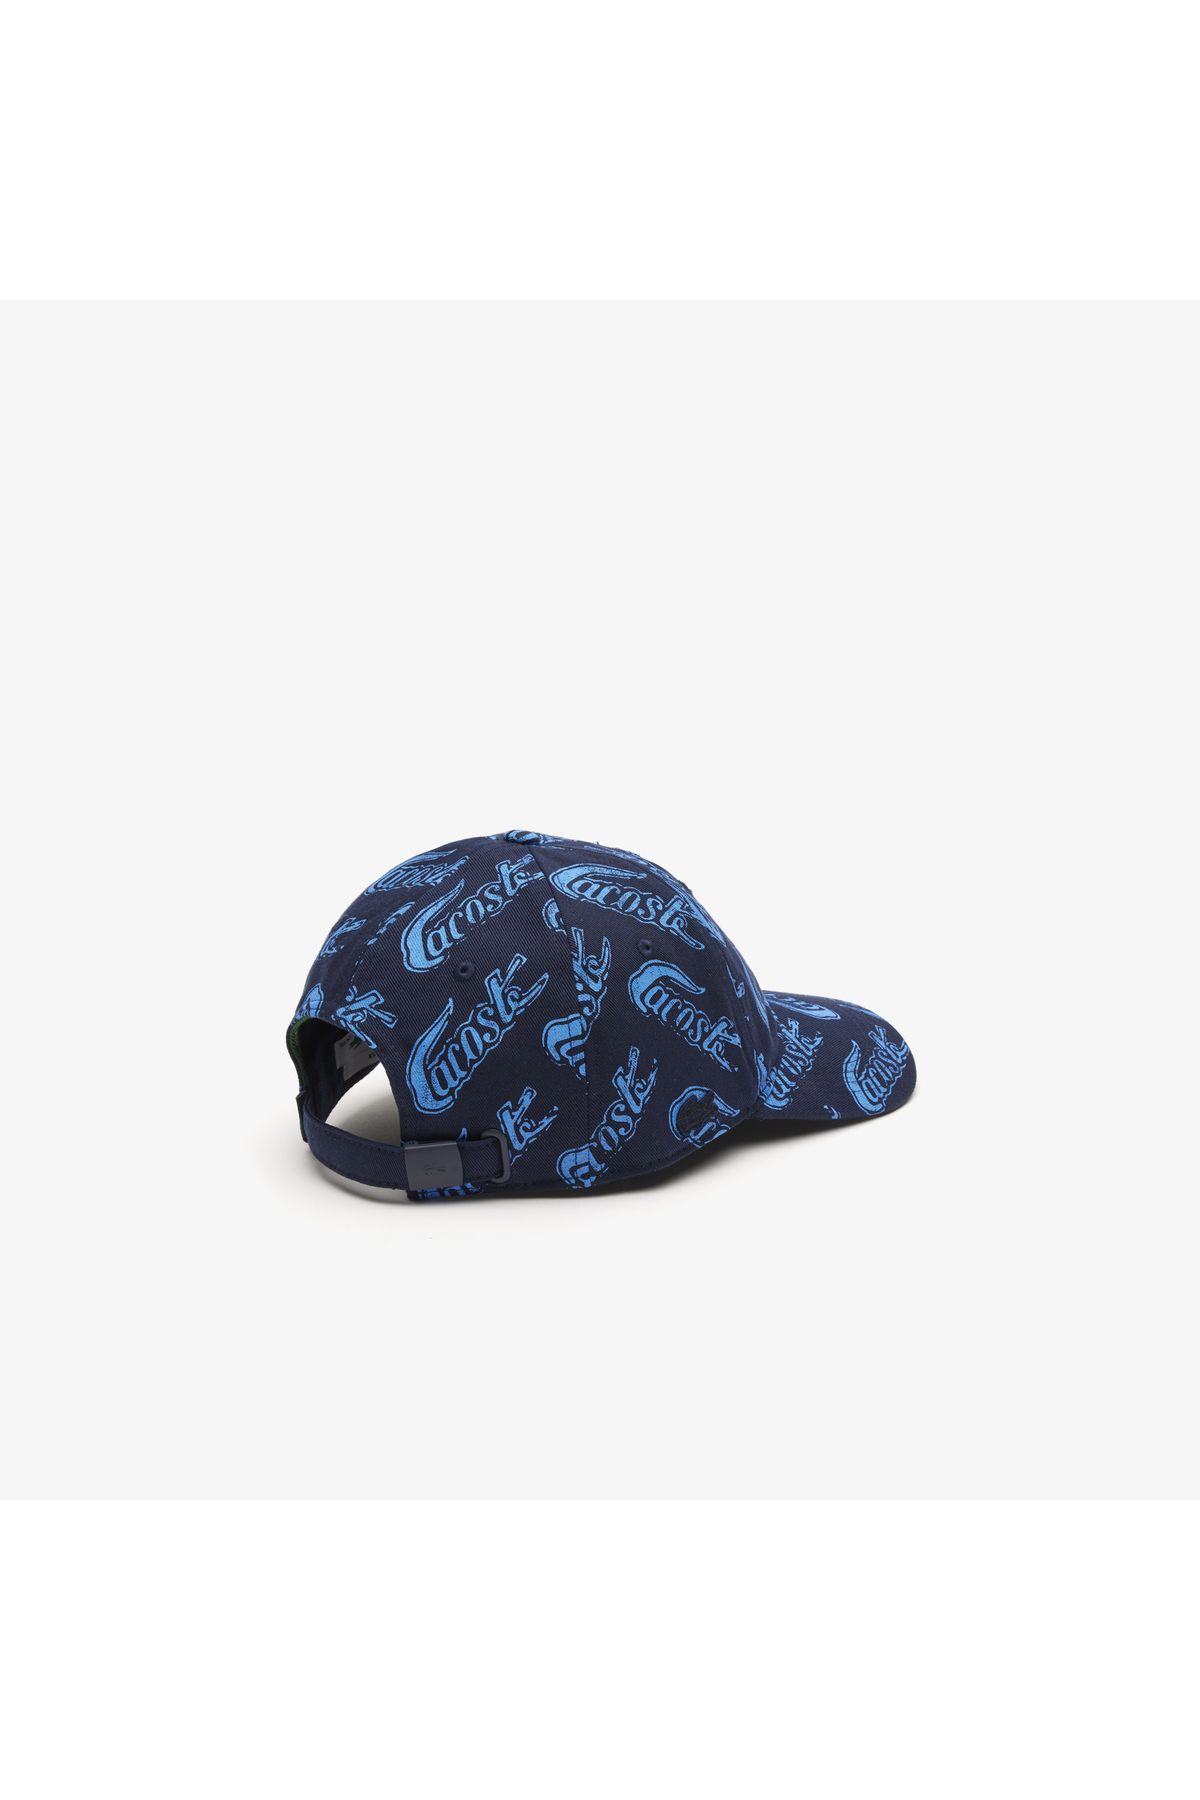 Lacoste unisex کلاه آبی دریایی چاپ شده